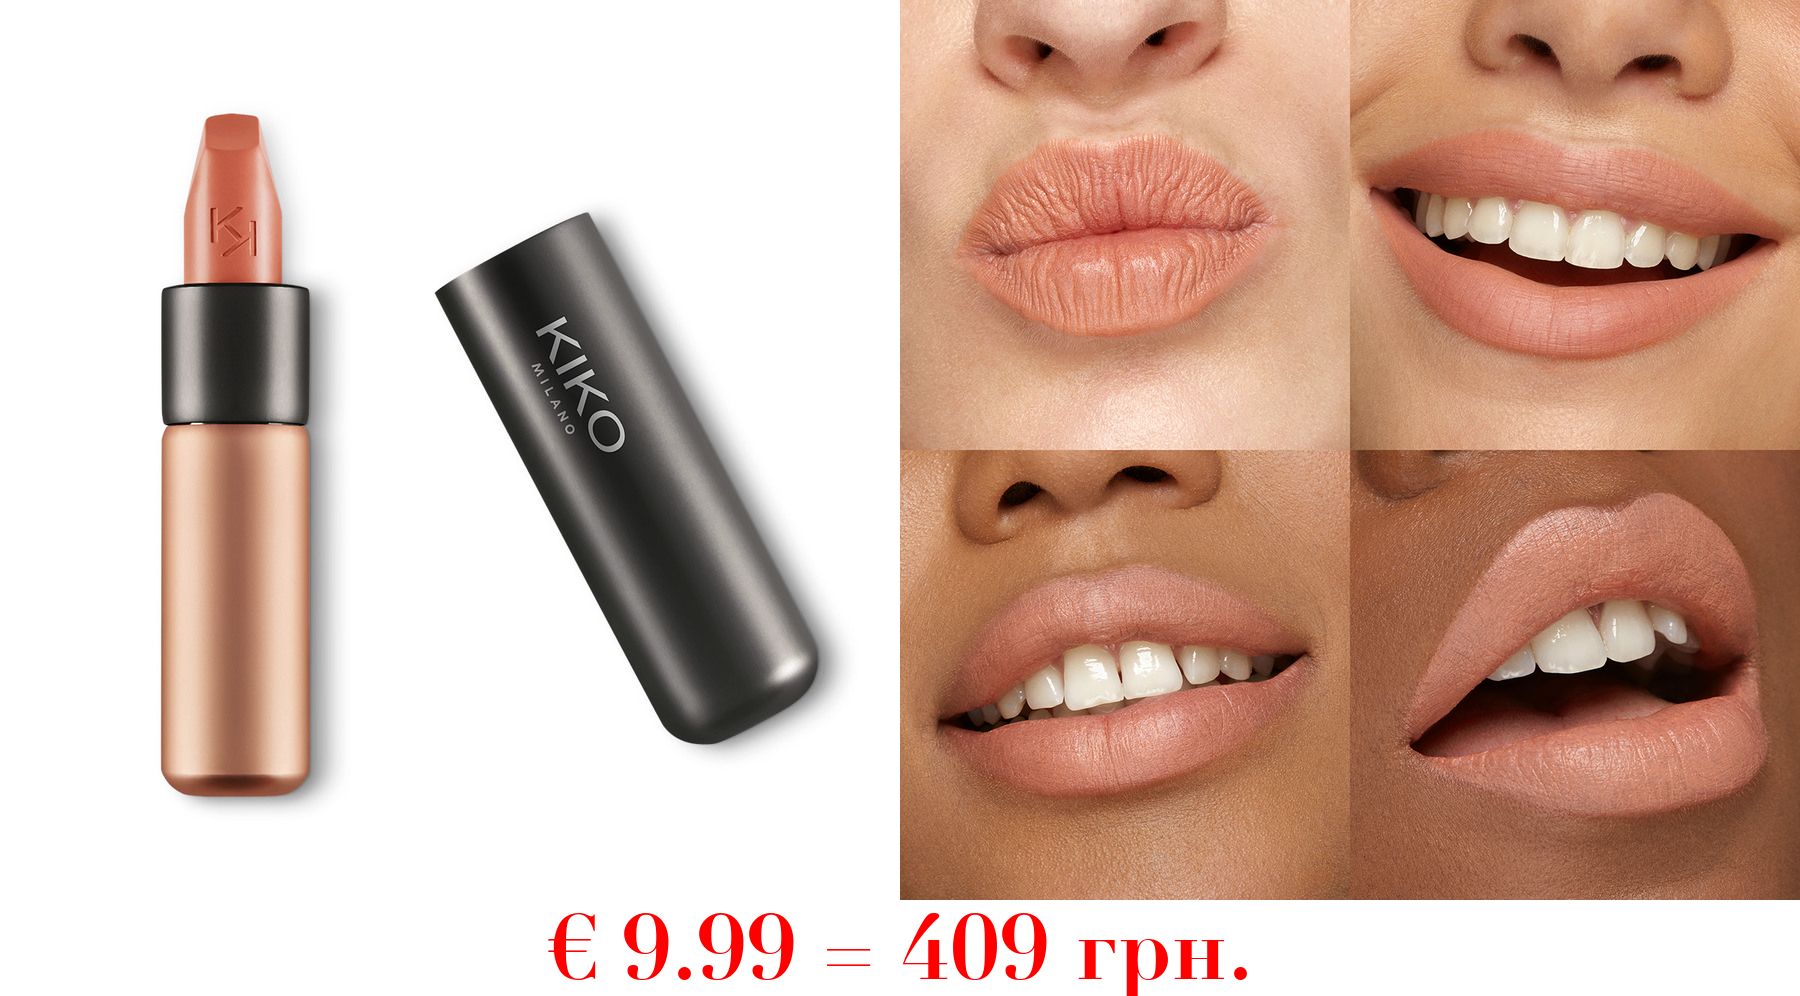 velvet passion matte lipstickKomfortabler Lippenstift mit Matt-Effekt